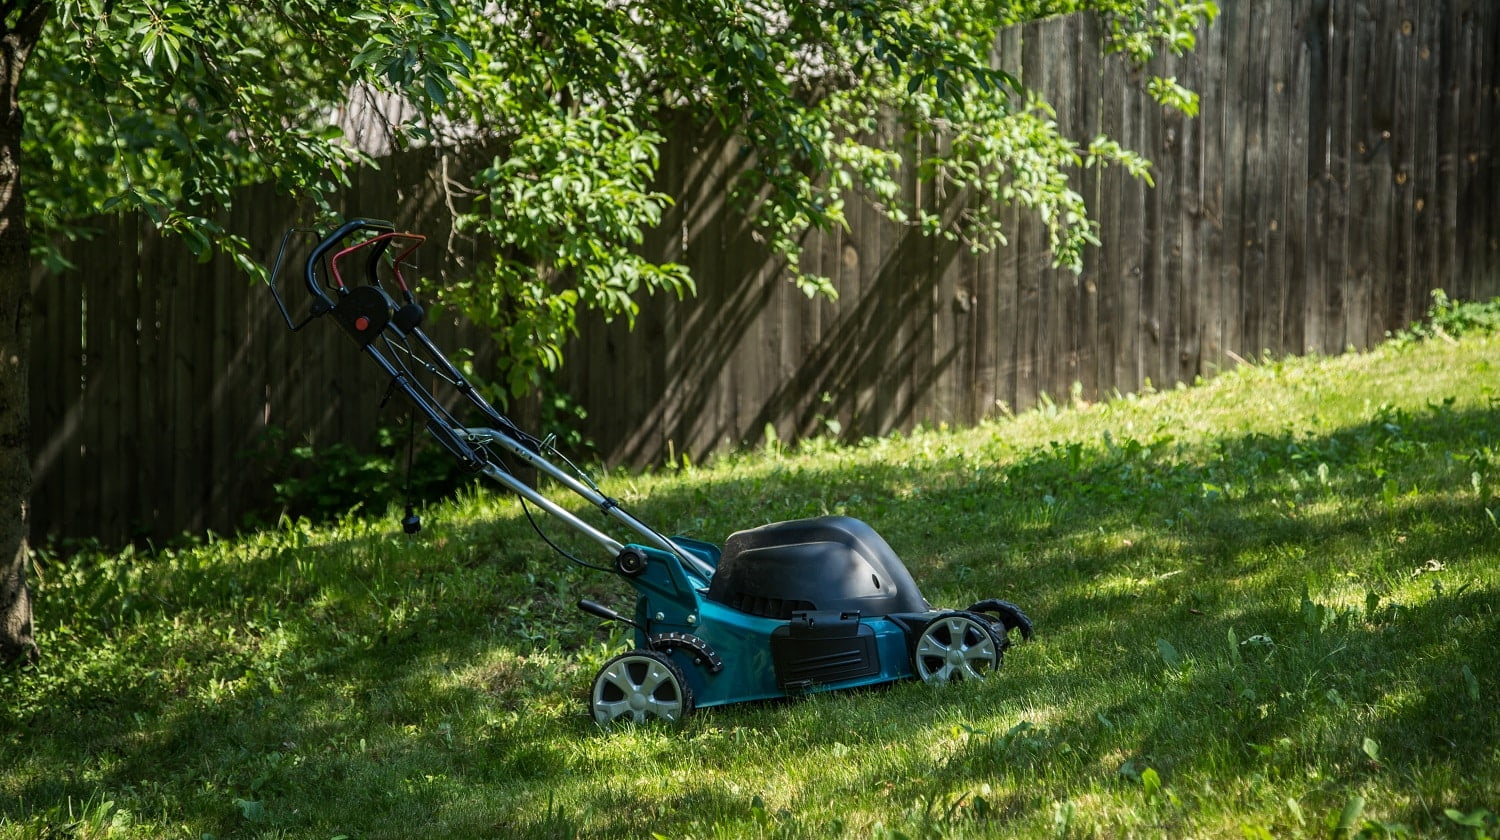 lawnmower on green grass in the backyard